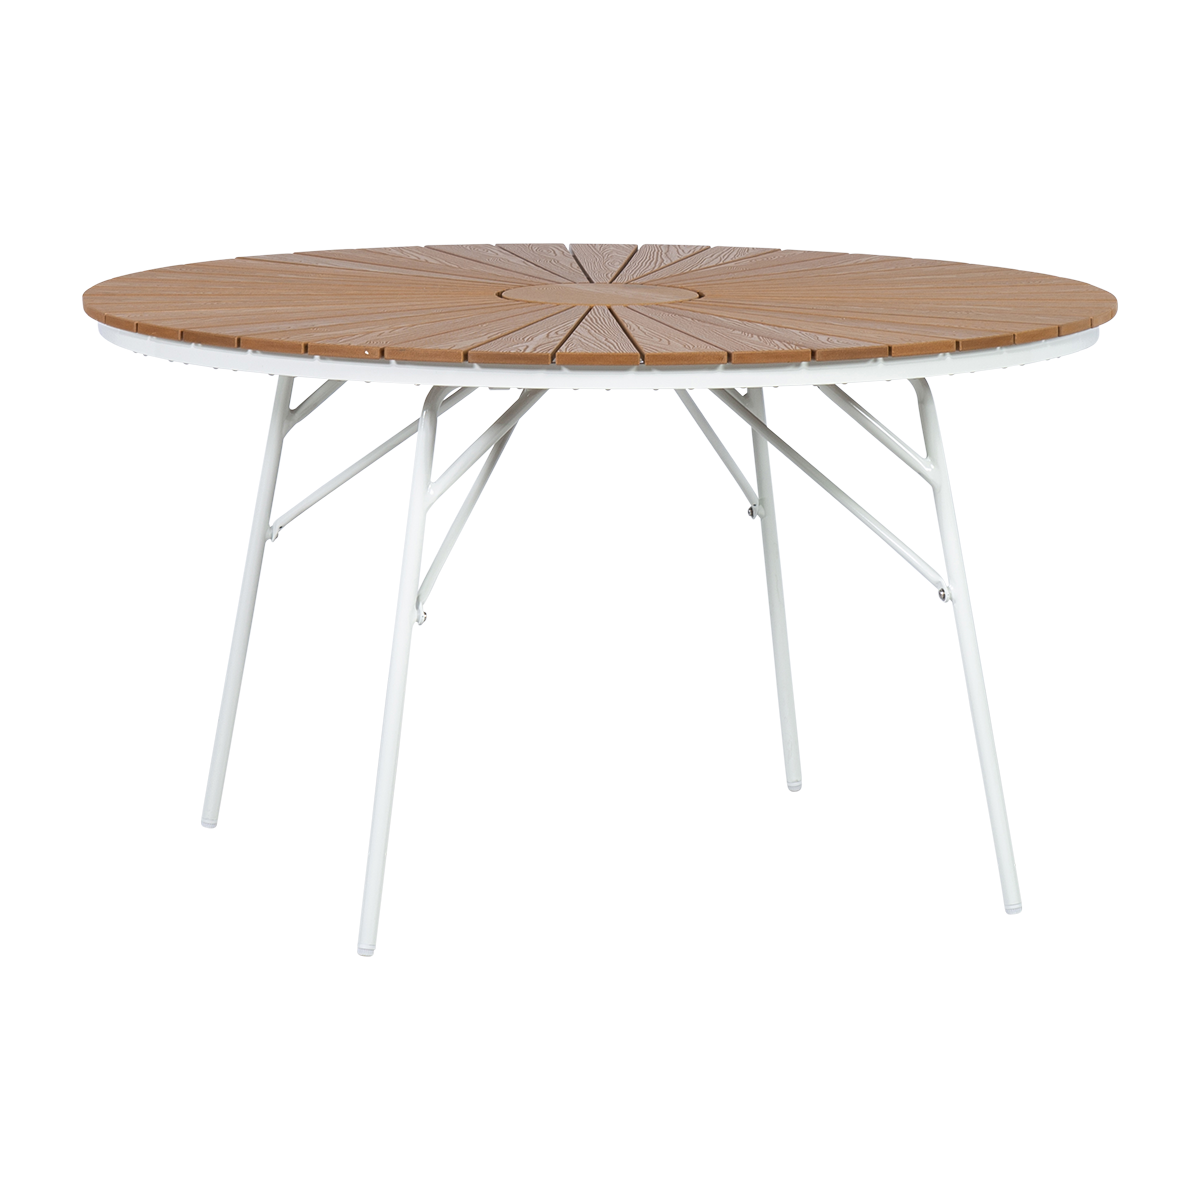 Cinas - Hard & Ellen Garden Table Ø 130 cm - Polywood - White/Teak look (2520110)